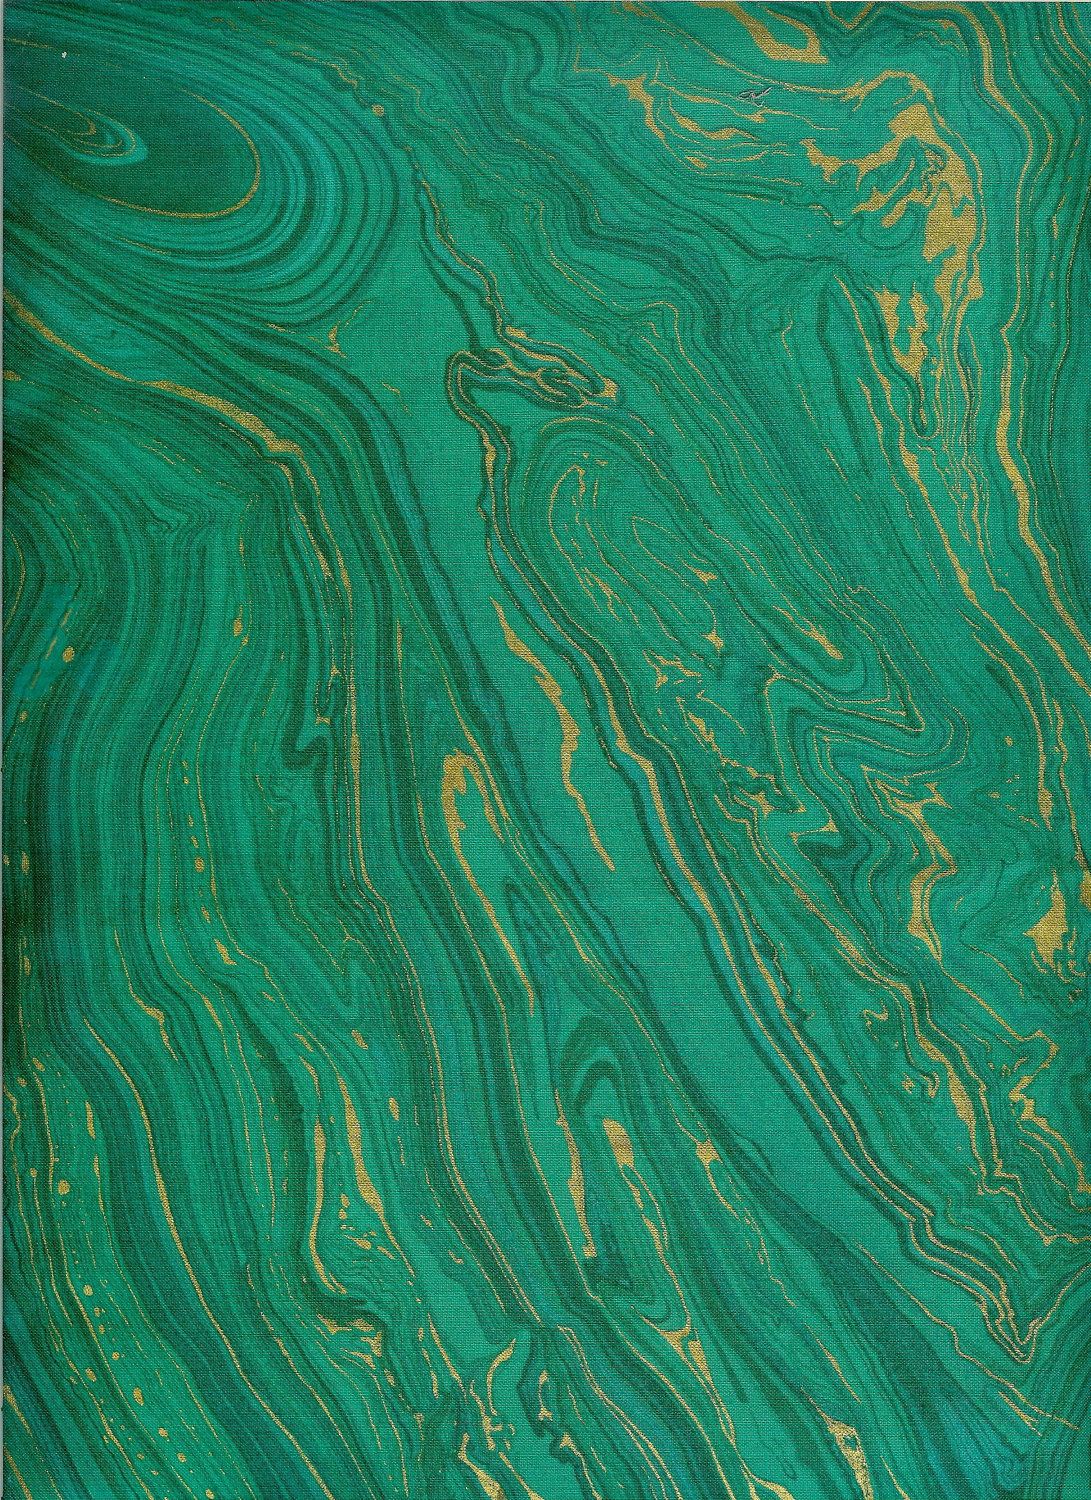 green marble wallpaper,aqua,green,blue,turquoise,teal